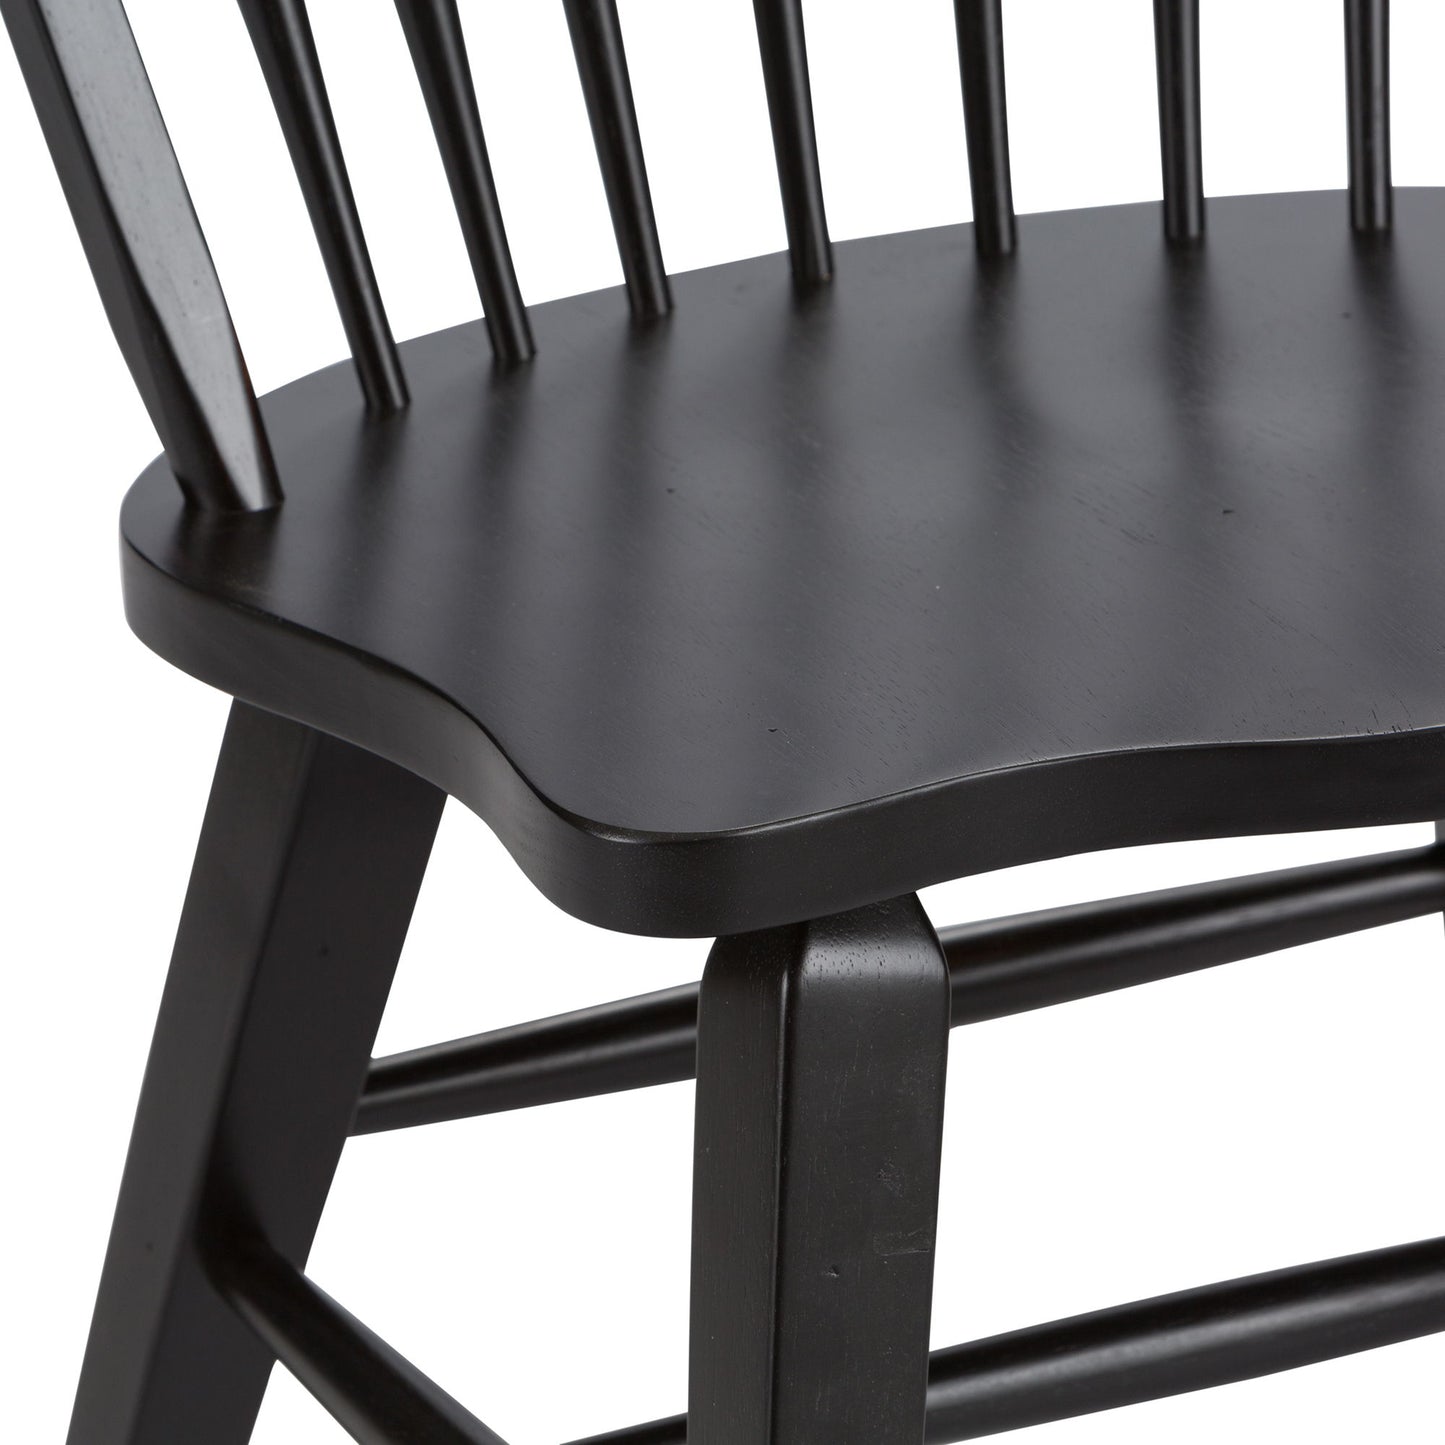 Hearthstone Ridge - Windsor Back Arm Chair